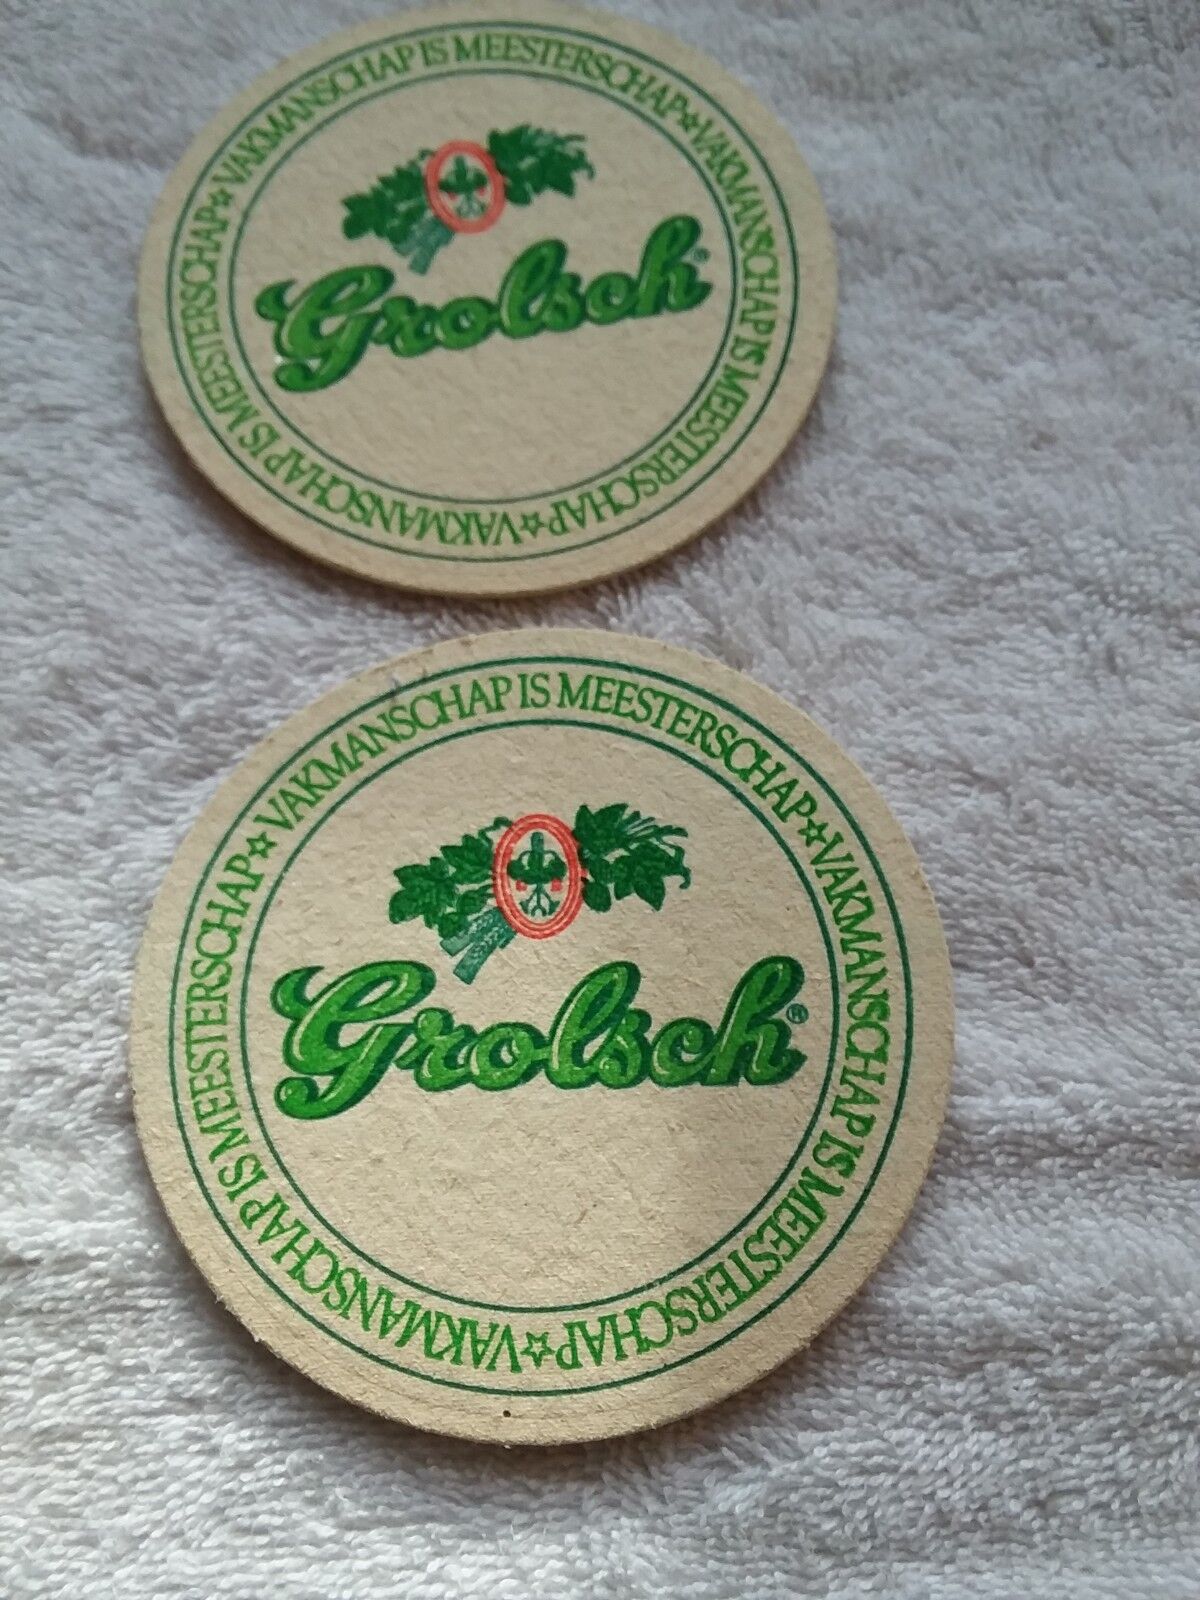 2 Grolsch vintage Beer Coaster